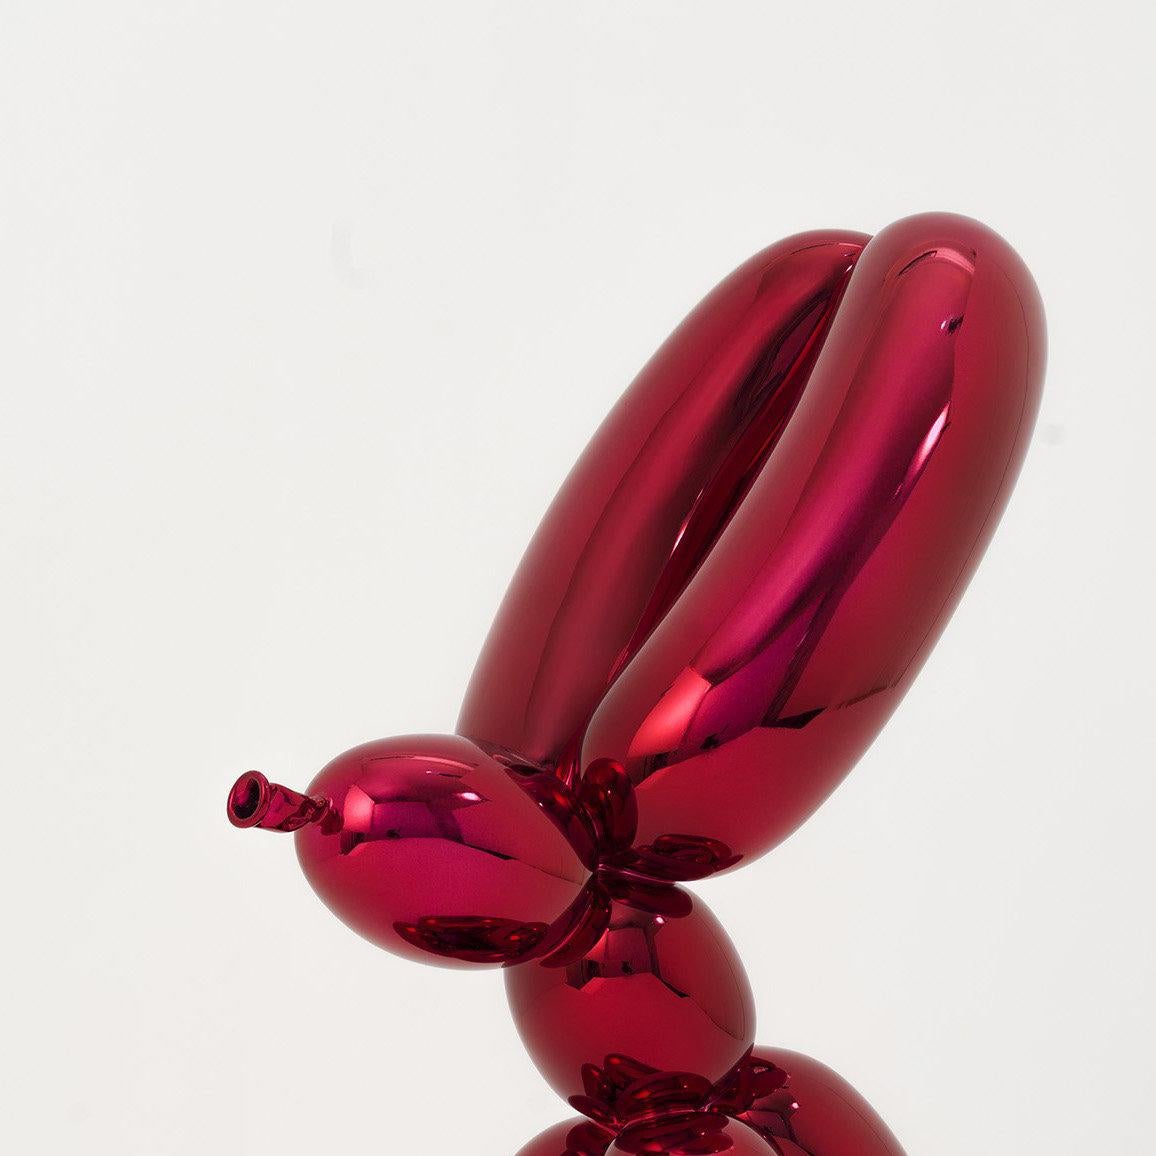 Balloon Rabbit (red) - Sculpture by Jeff Koons